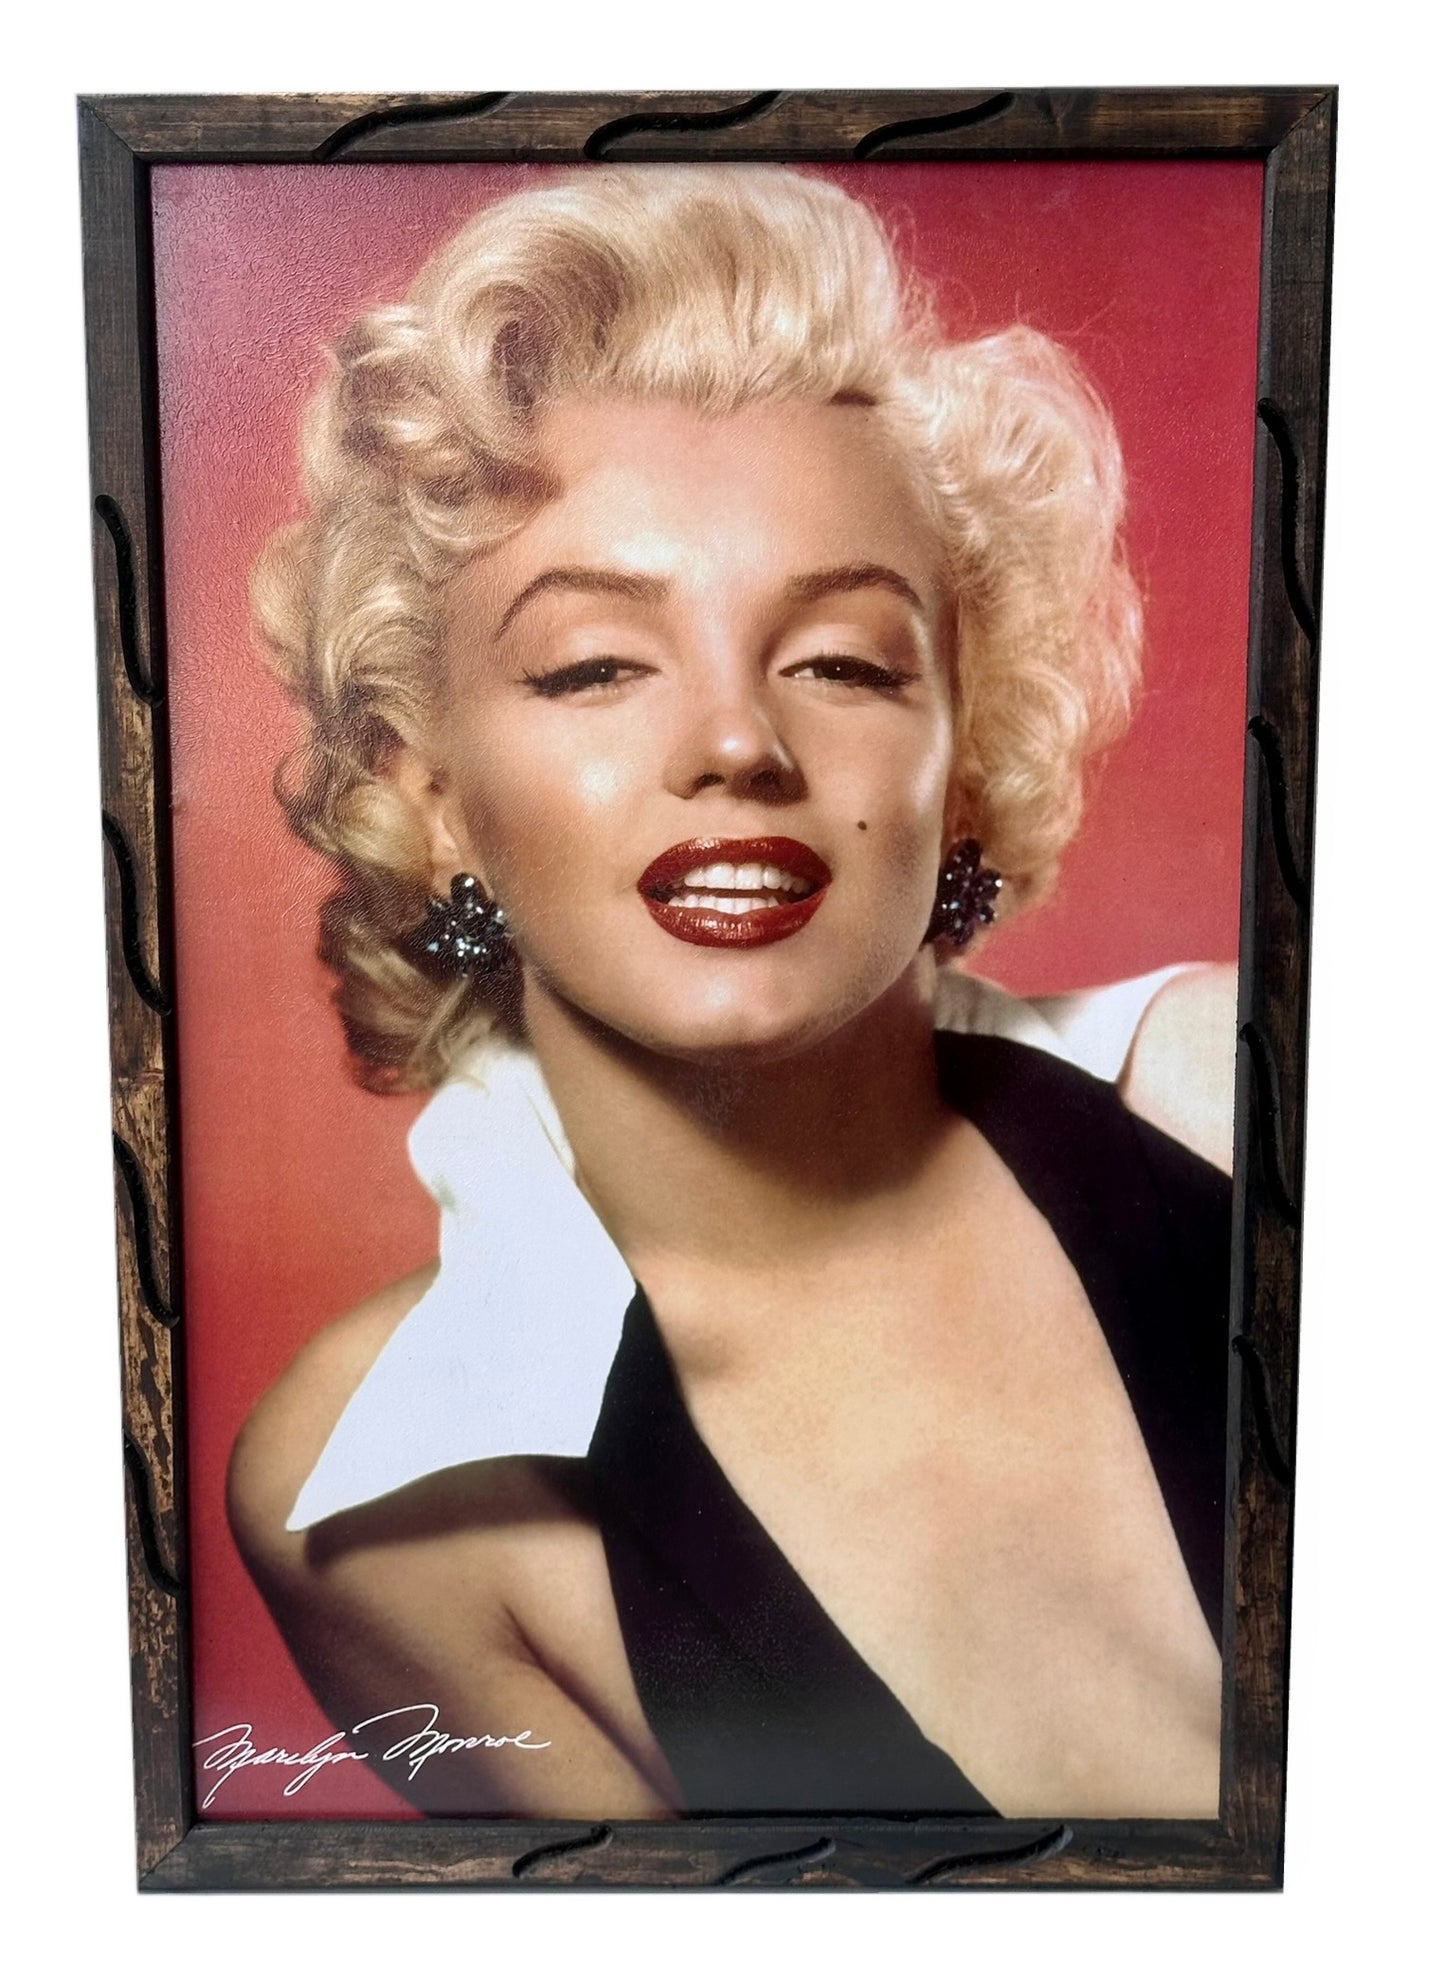 Marco de fotos con cara de Marilyn Monroe de 36" x 24"